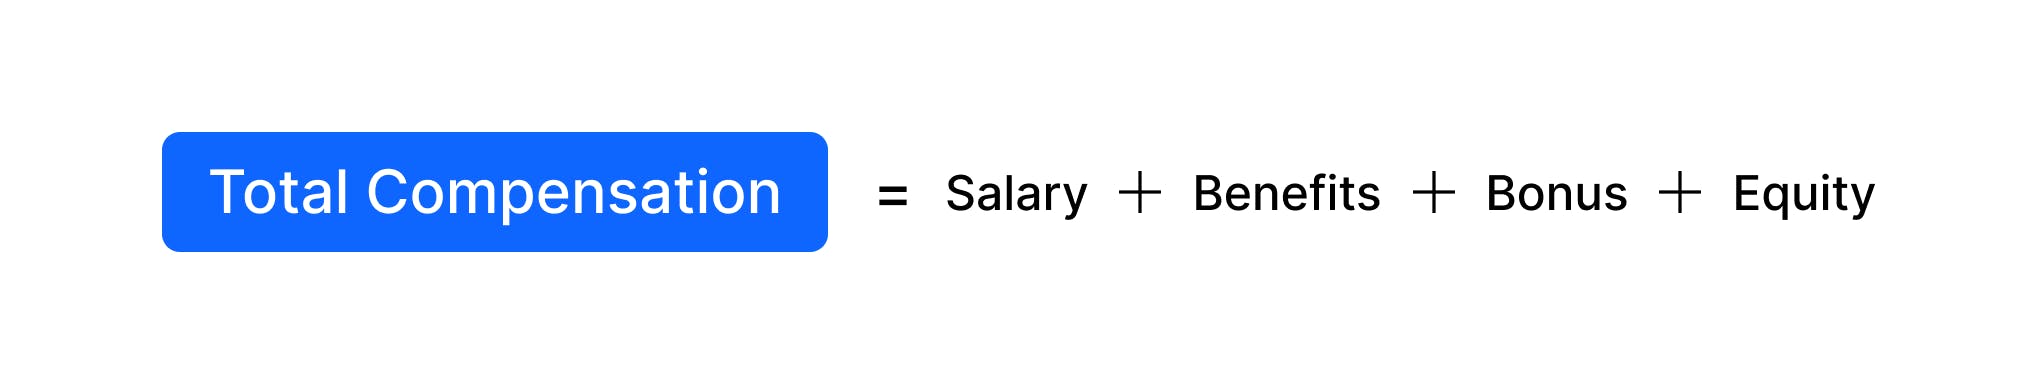 Total compensation = salary + benefits + bonus + equity